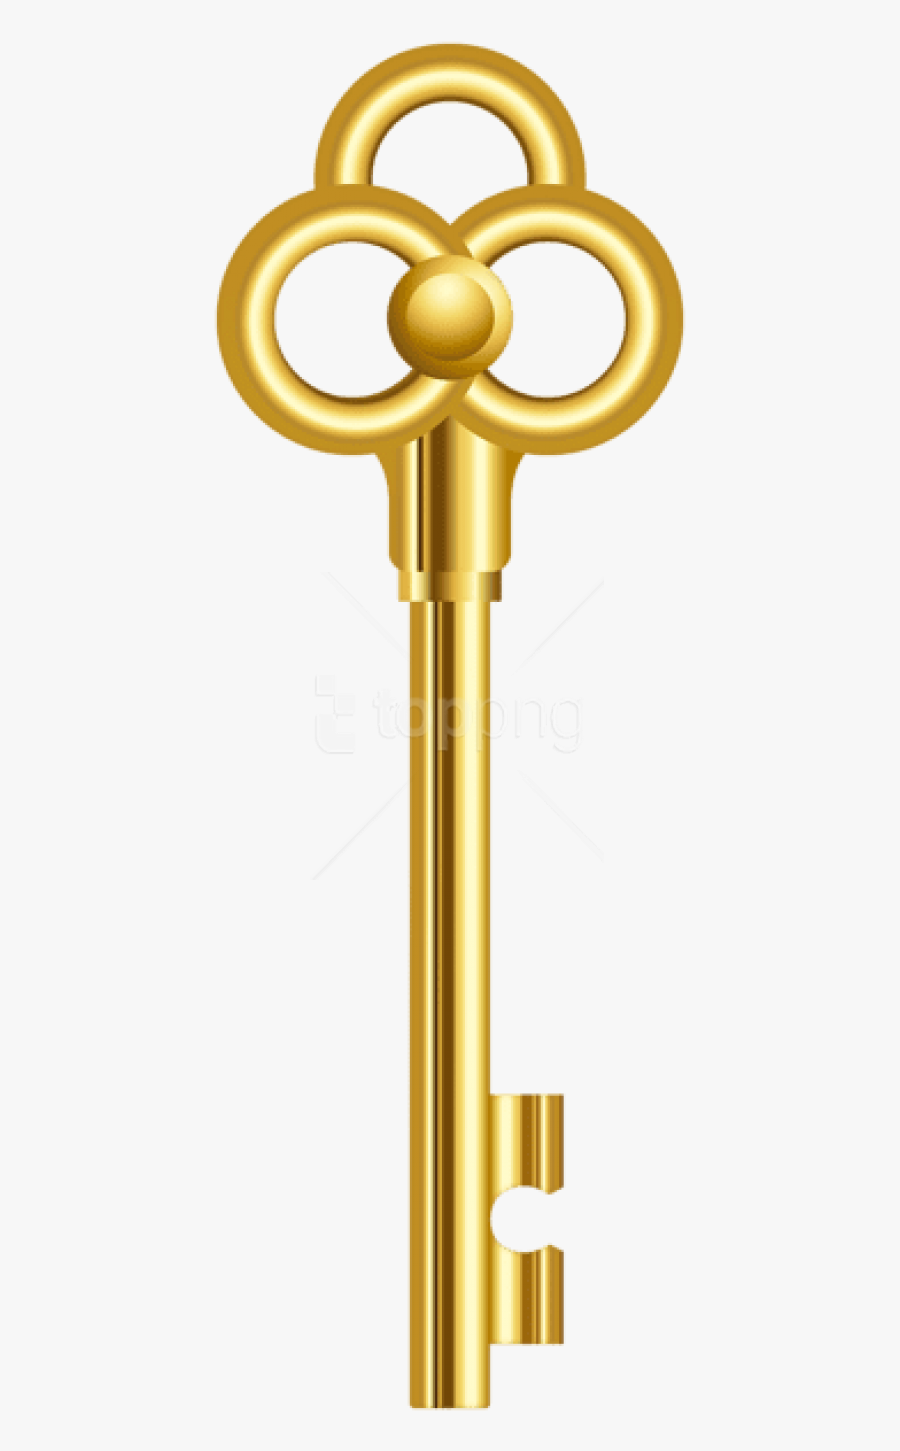 Transparent Gold Cross Png - Golden Key Cross Png, Transparent Clipart